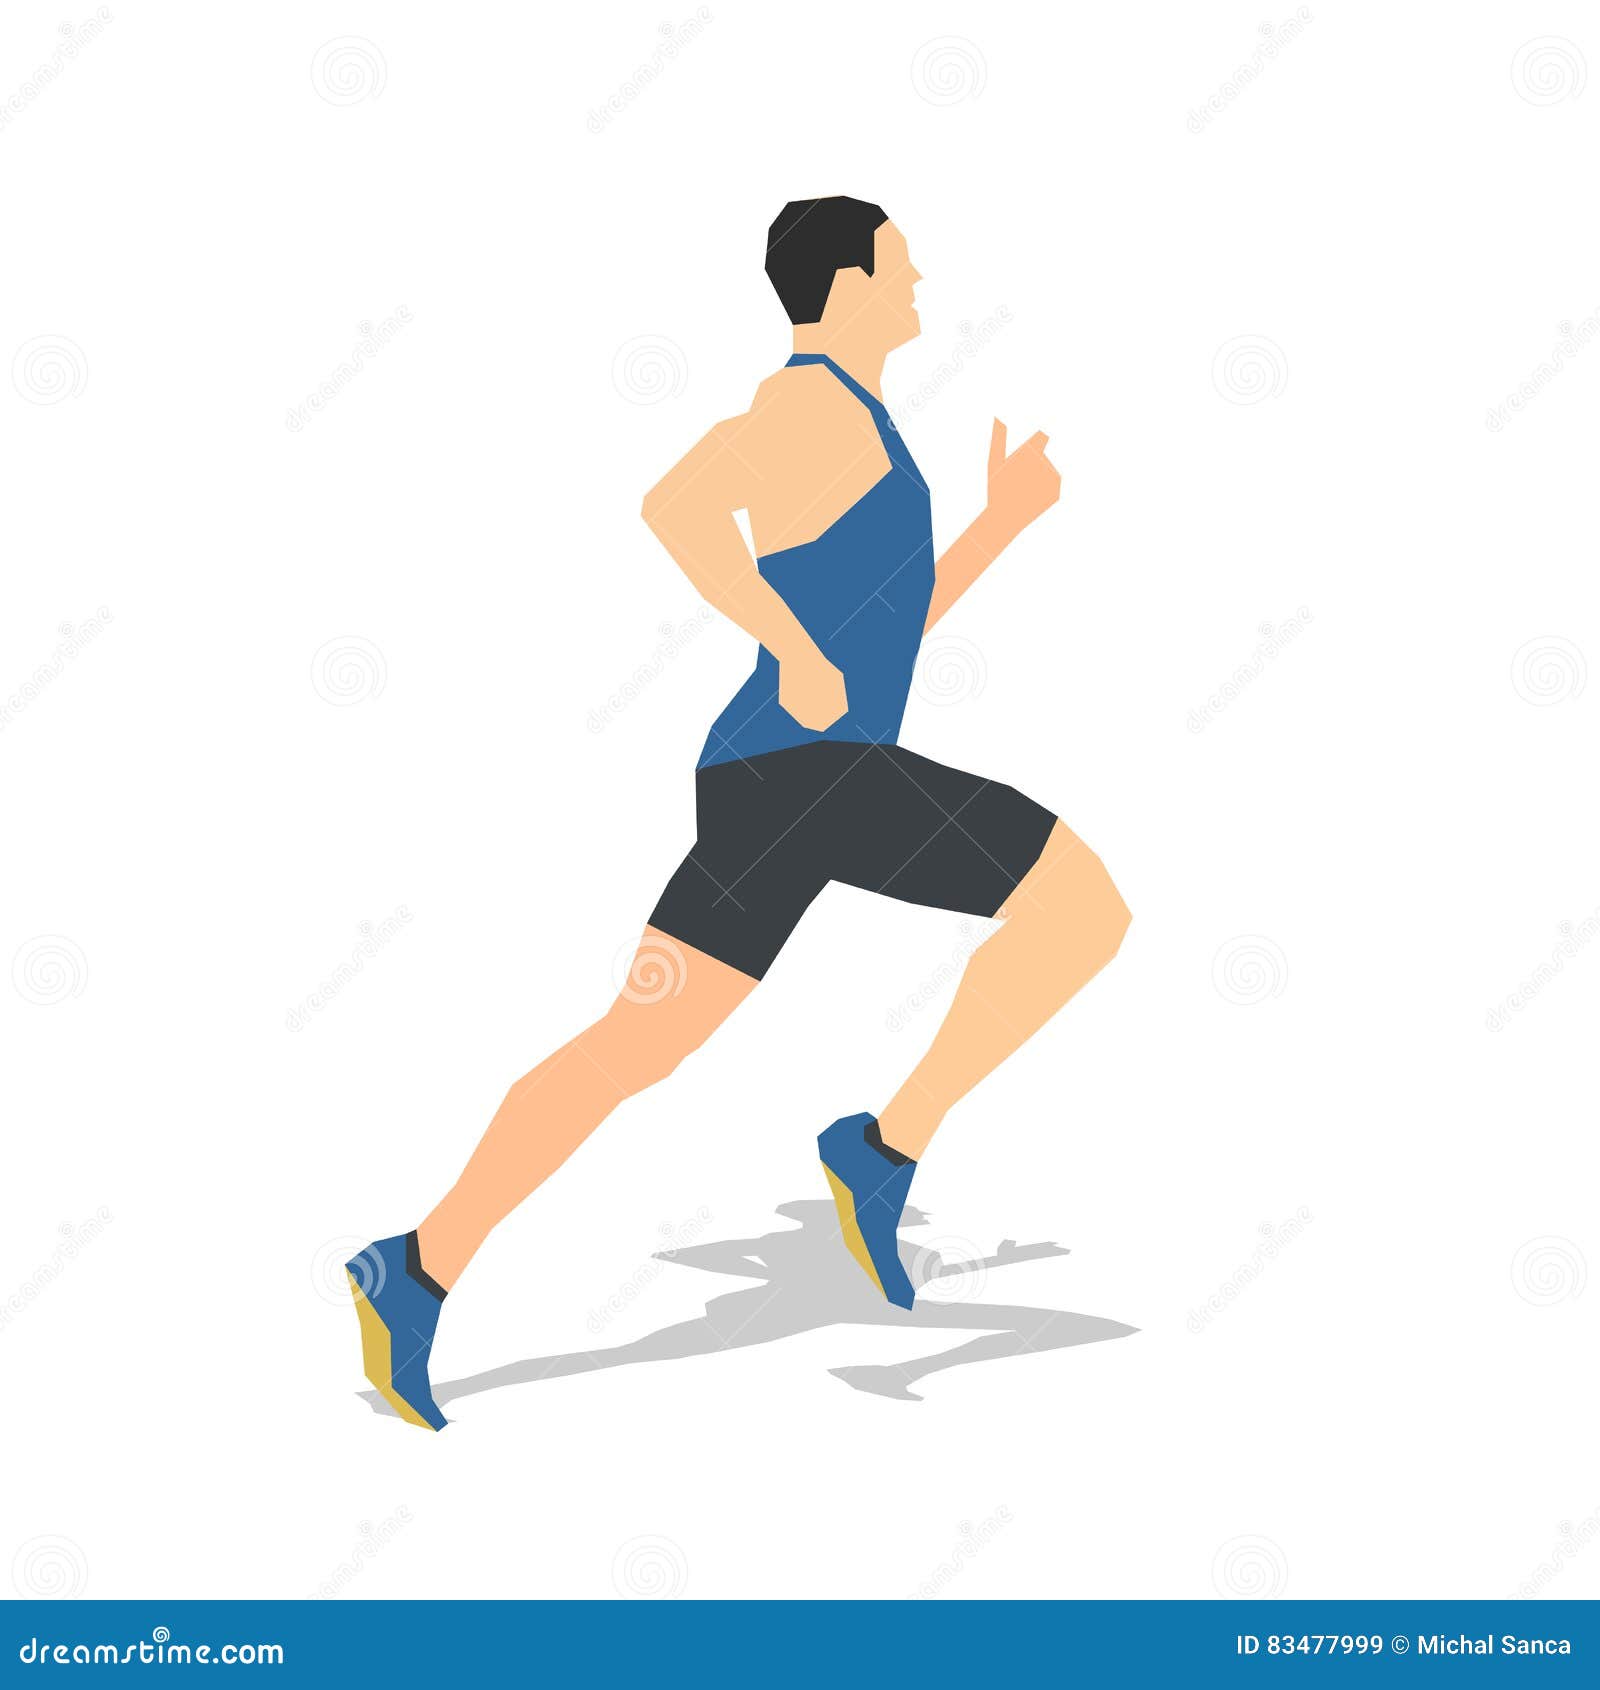 Running Exercise Flat Design Illustration Stock Illustration ...